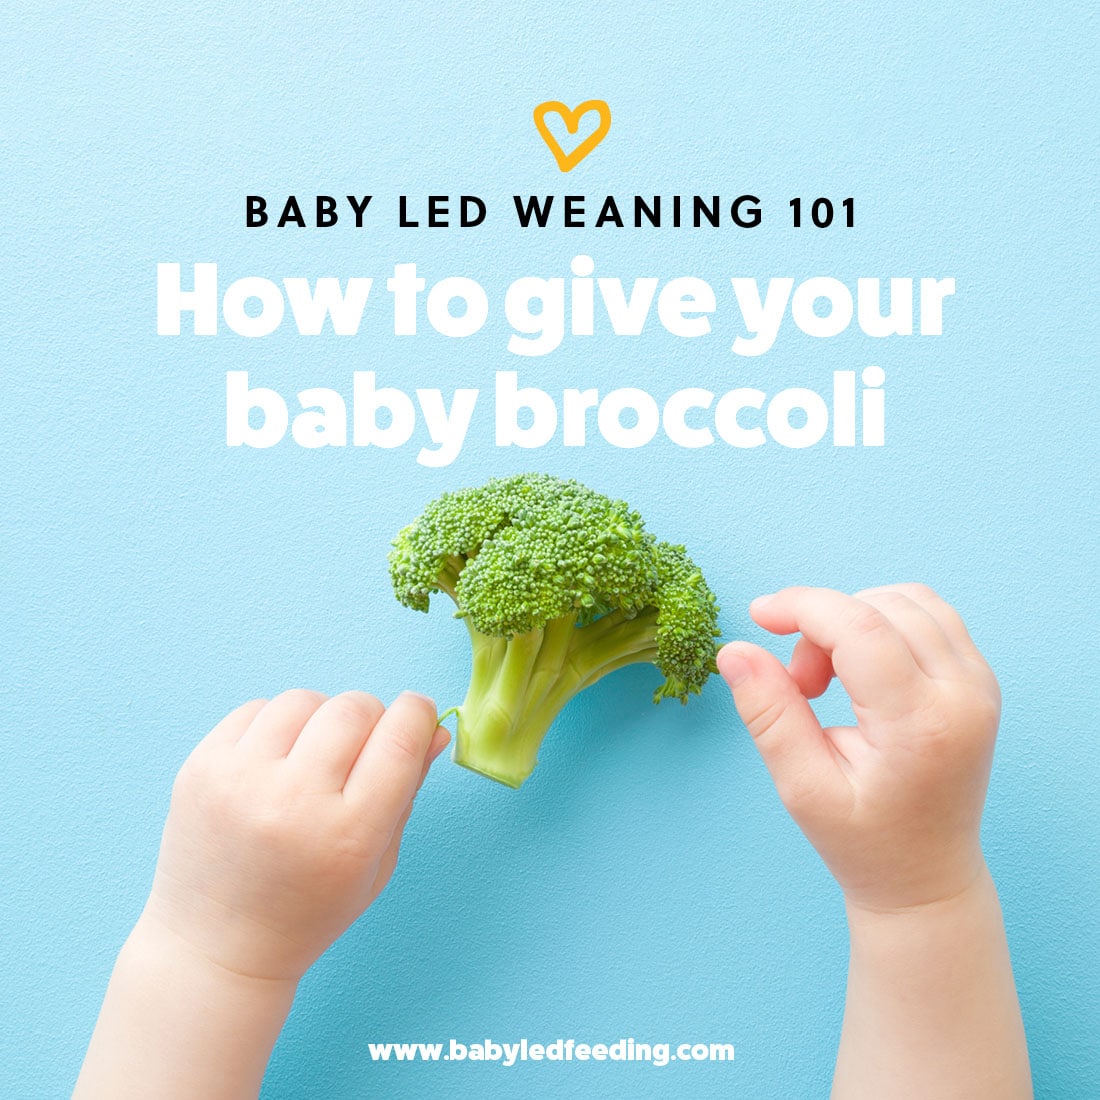 https://www.babyledfeeding.com/wp-content/uploads/2021/03/HOW-TO-GIVE-MY-BABY-BROCCOLI.jpg